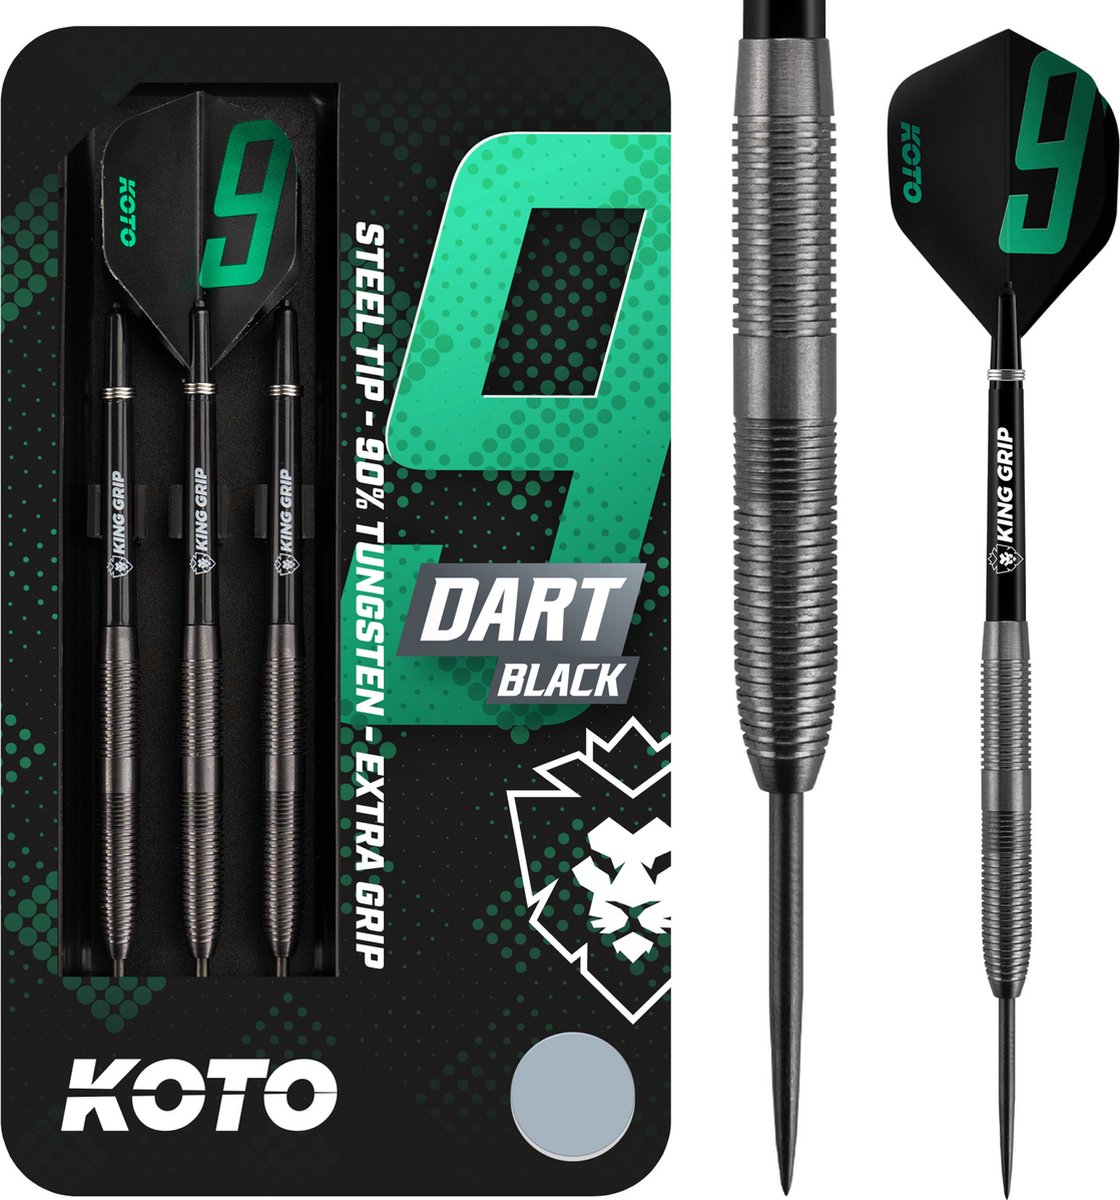 KOTO 9-Dart Black 90% - Dartpijlen - 23 Gram - Tungsten Darts - 3 Pijlen - Dartset - Met Dartcase